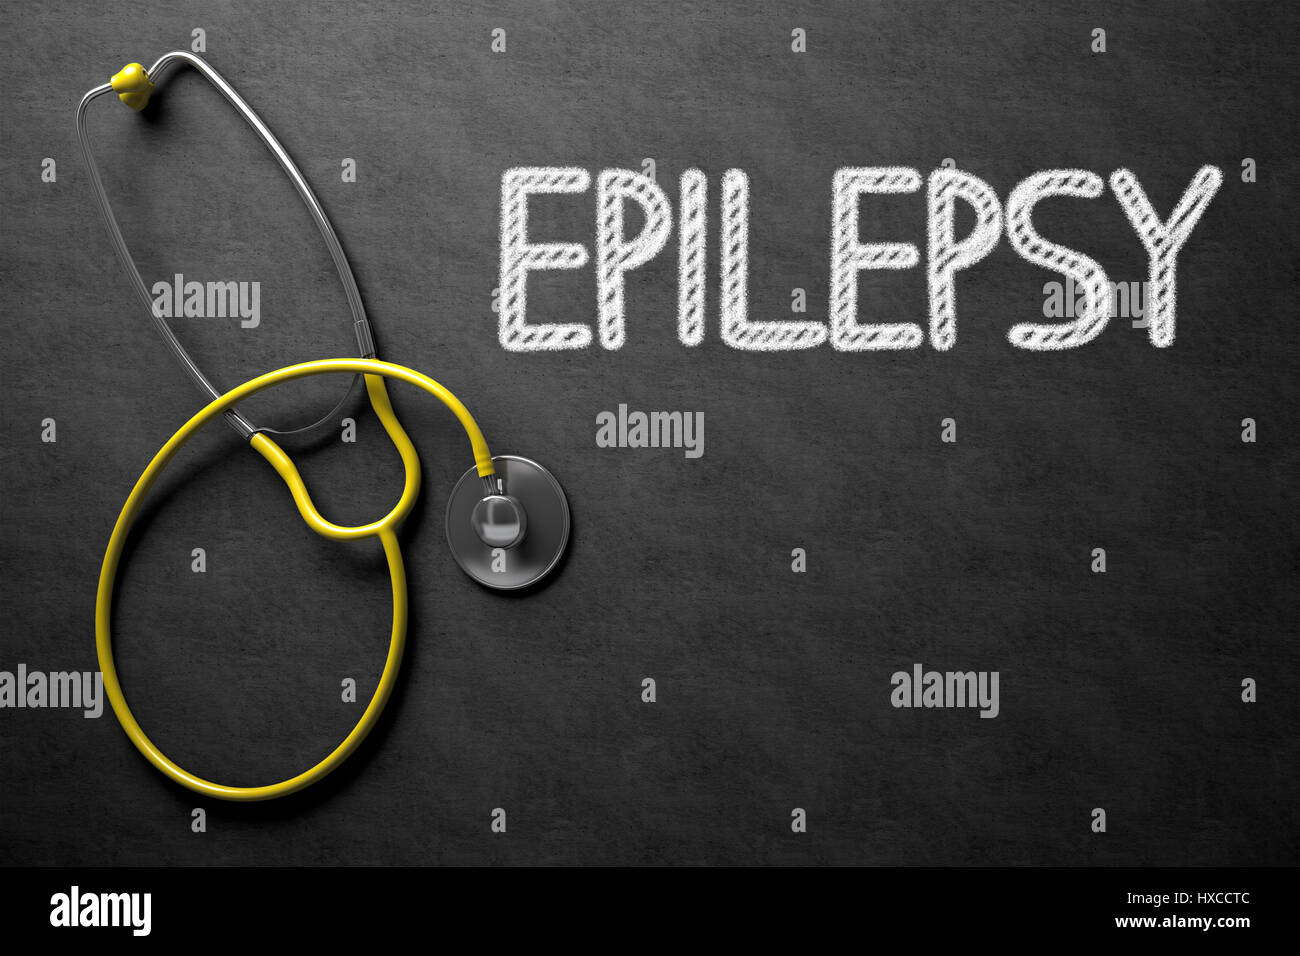 Epilepsy - Text on Chalkboard. 3D Illustration. Stock Photo